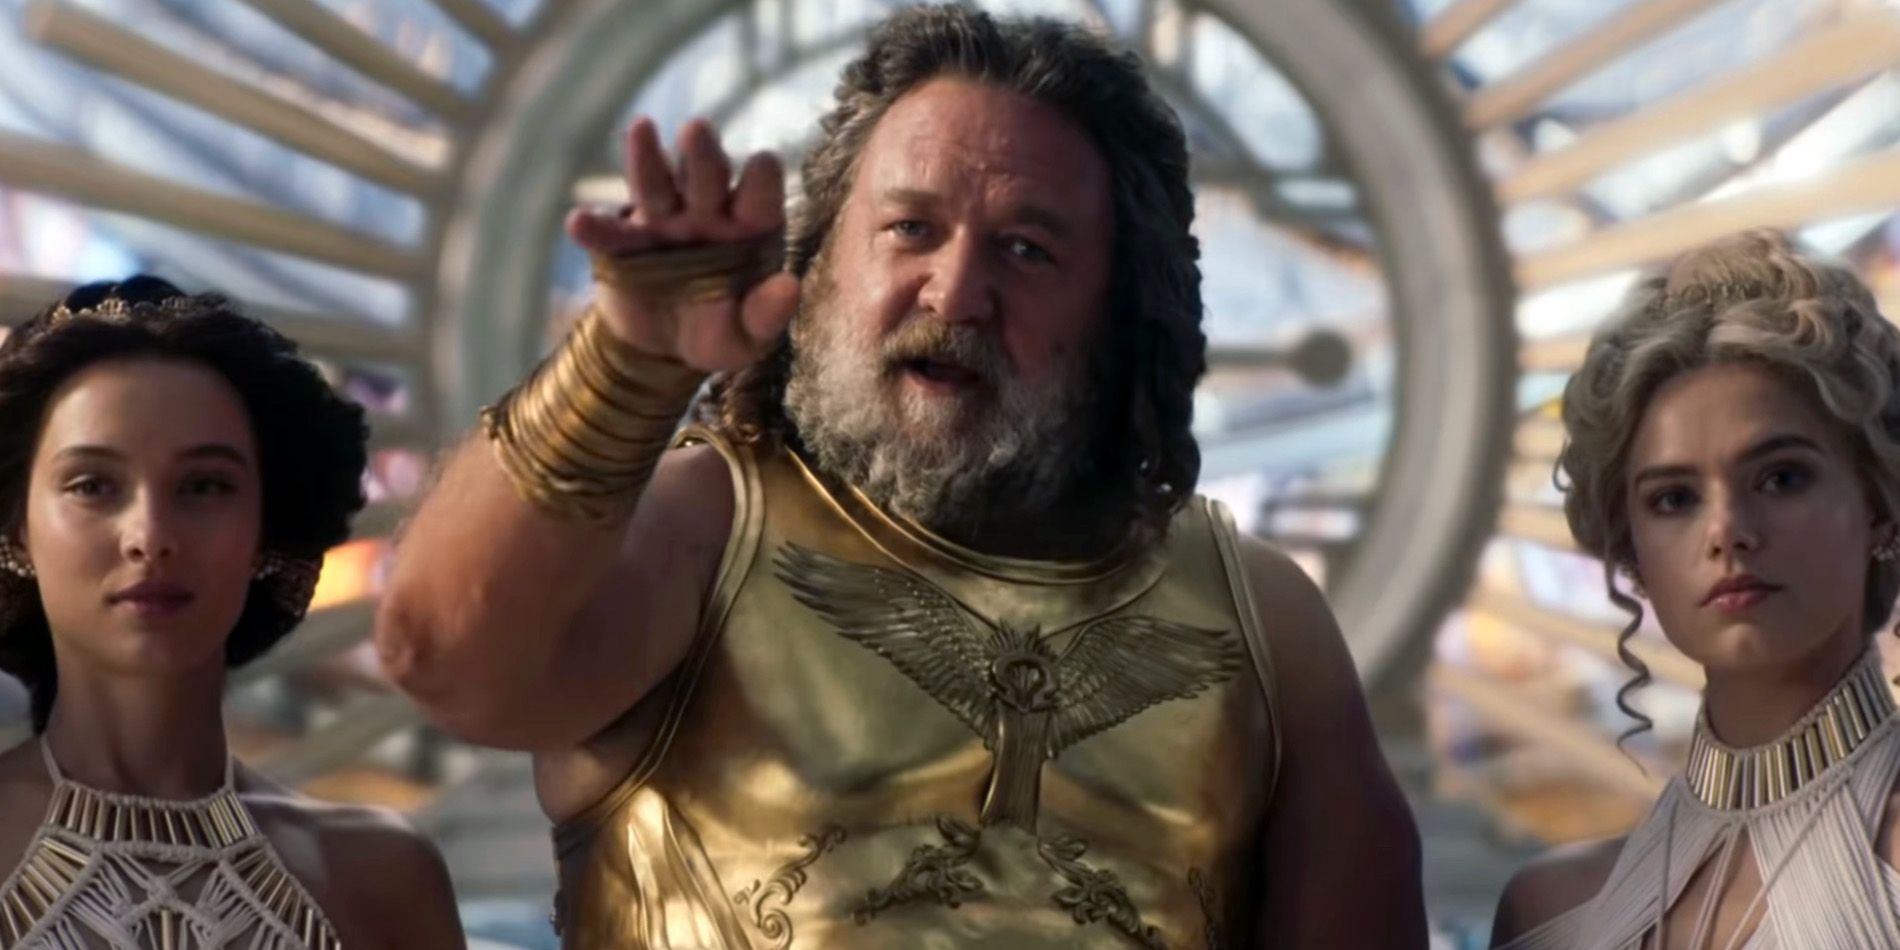 Russell Crowe as Zeus